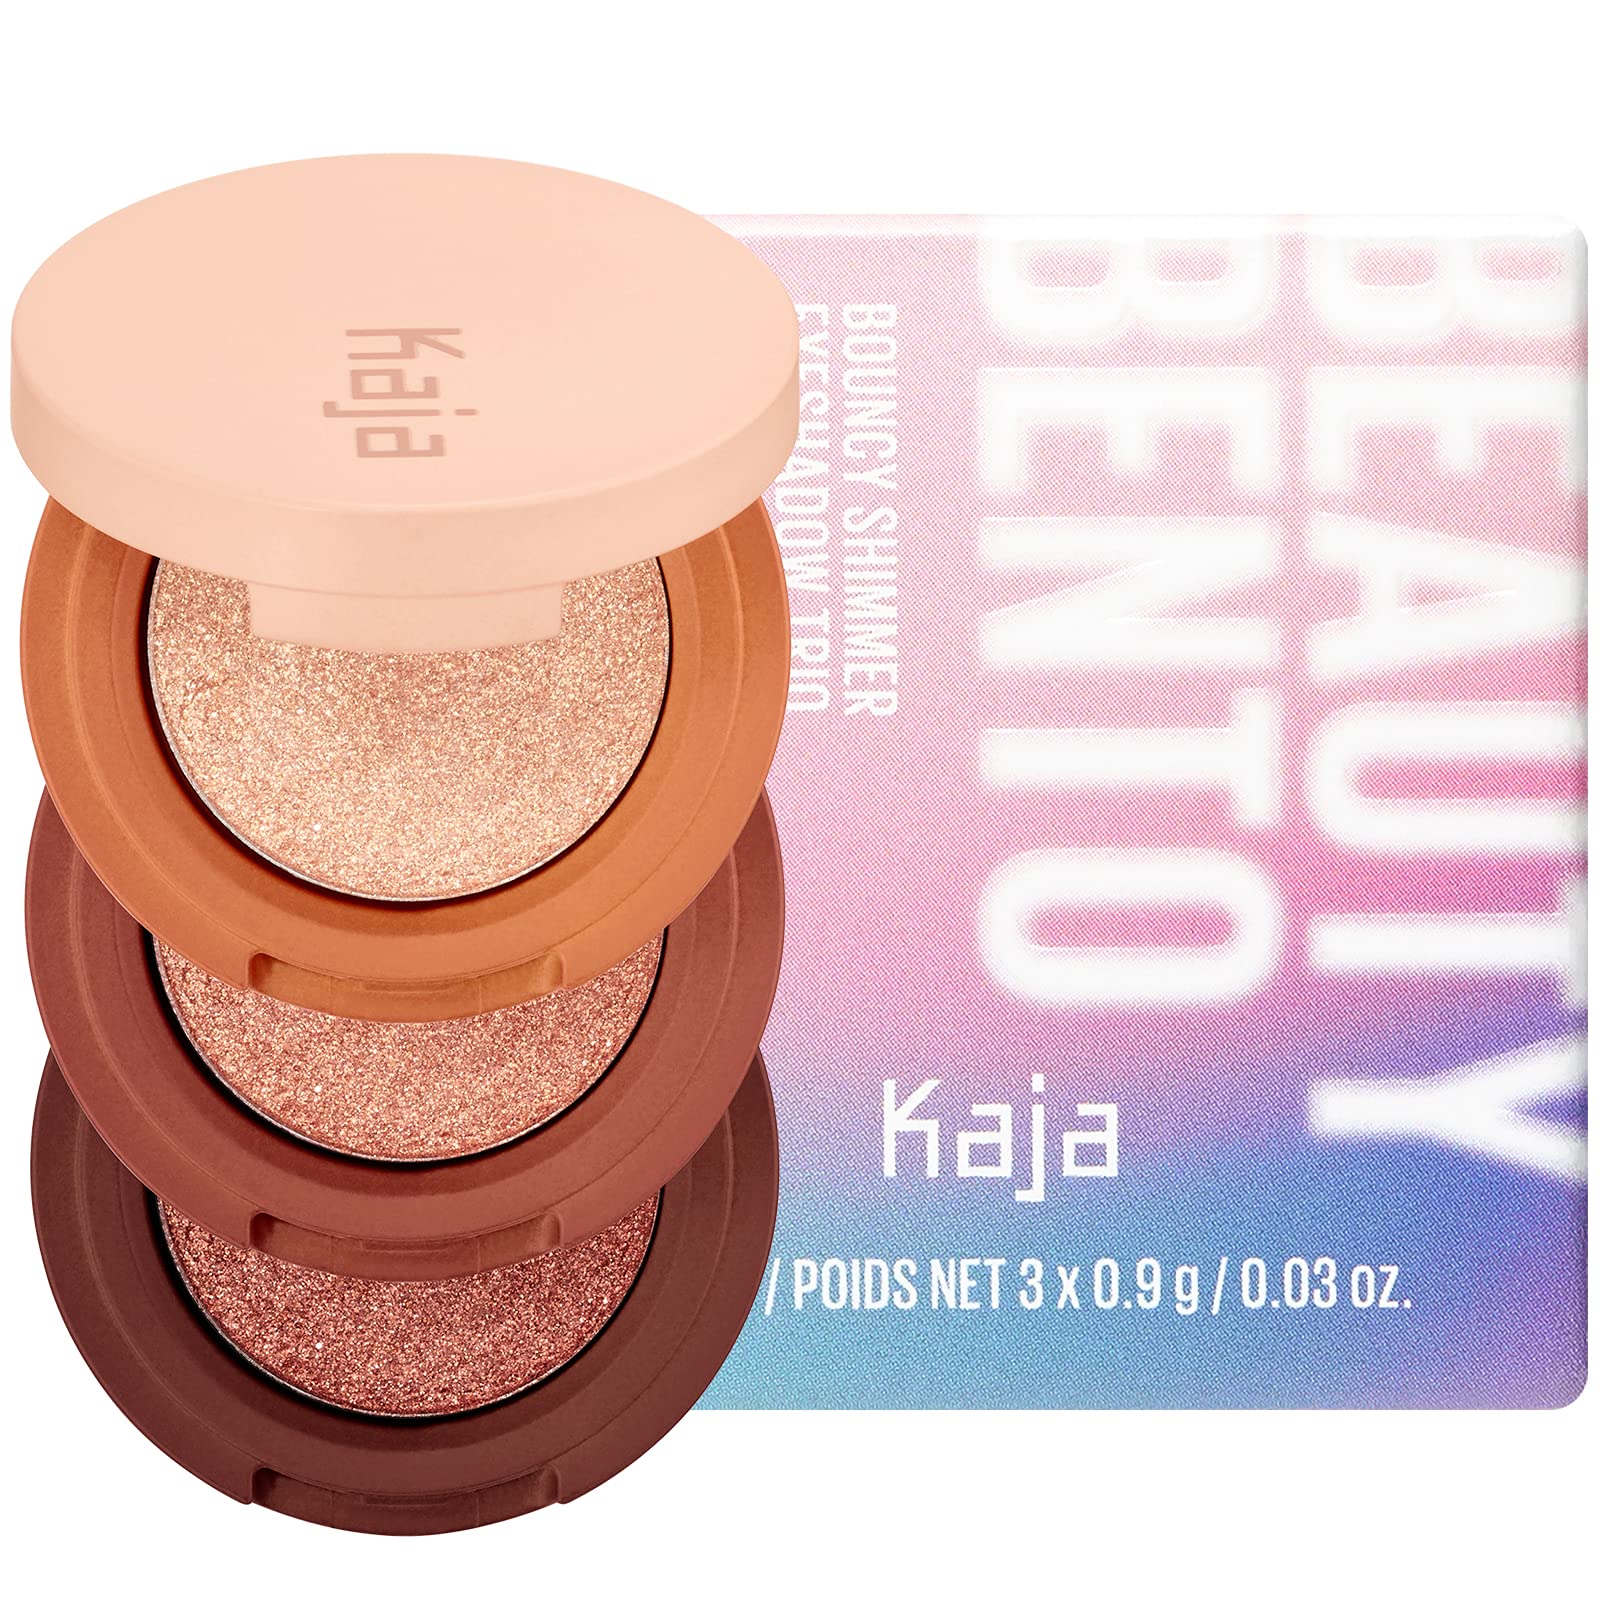 KAJA Eye Bento Collection - Bouncy Eyeshadow Trio | Gilded Bronze Tones, Travel Size, 03 Toasted Caramel, 2019 Allure Best of Beauty Award, 0.03 Oz